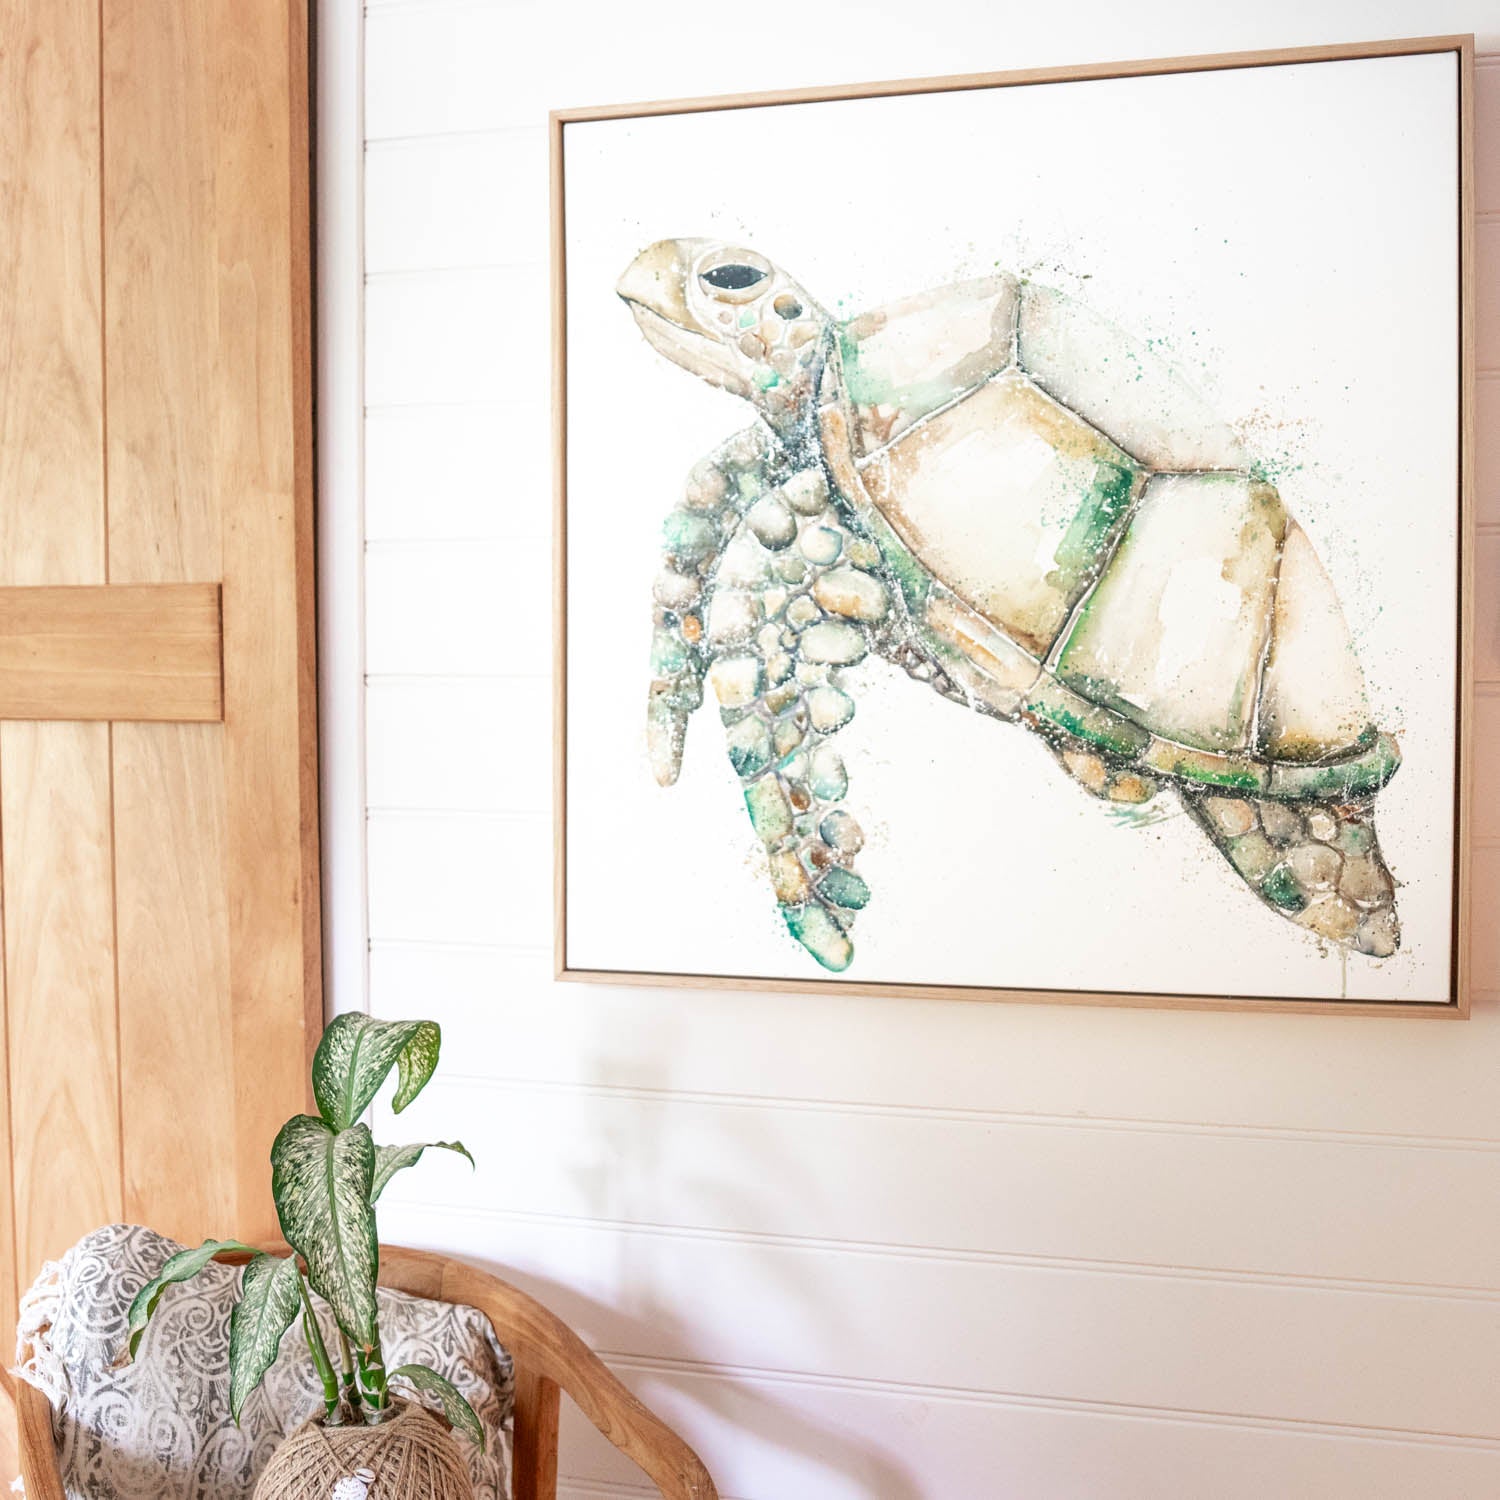 turtle canvas artwork hanging on wall in oak frame